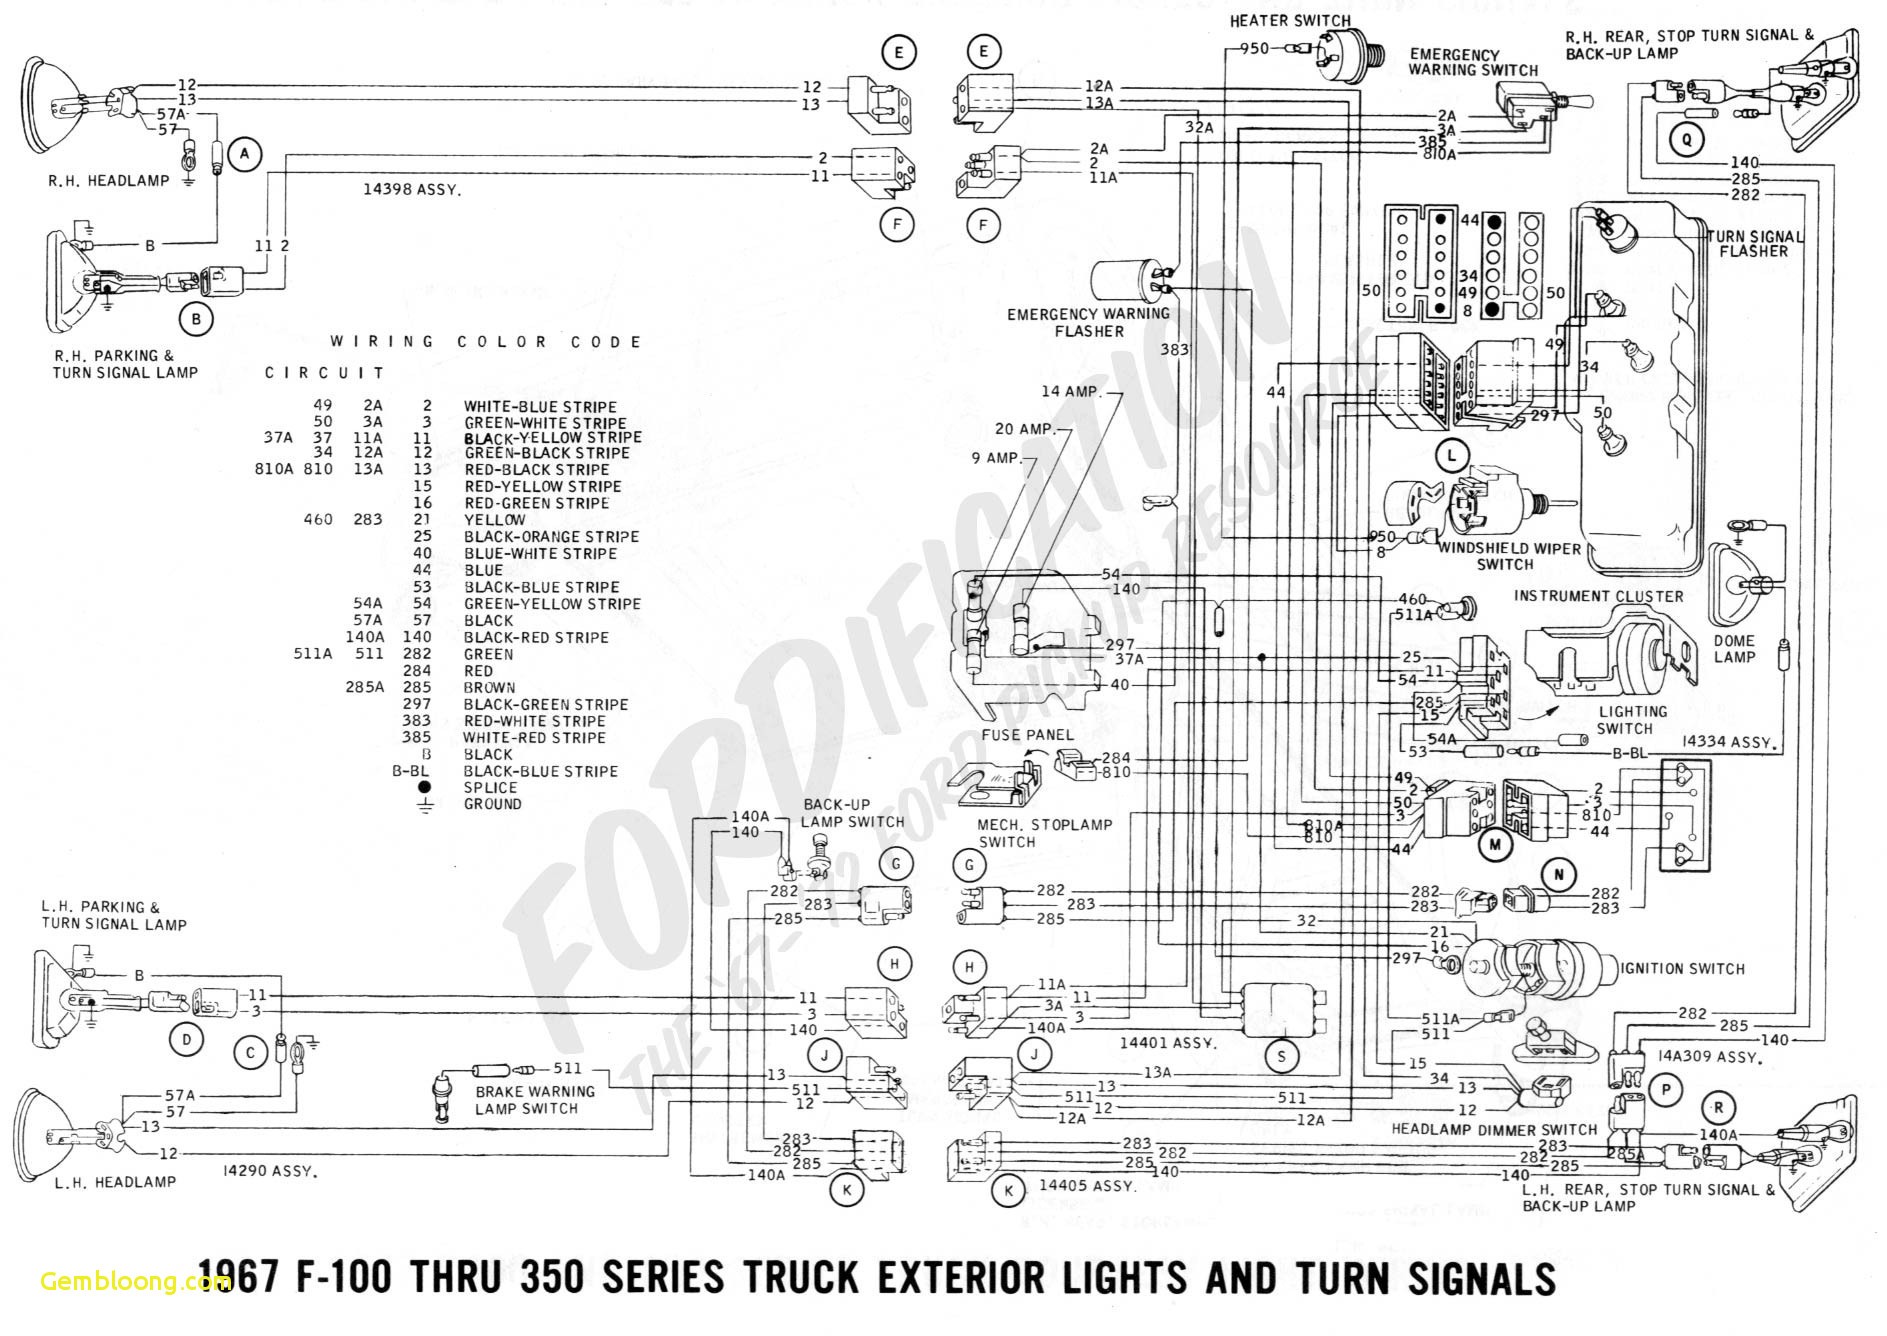 2006 F150 Engine Diagram Download ford Trucks Wiring Diagrams ford F150 Wiring Diagrams Best Of 2006 F150 Engine Diagram